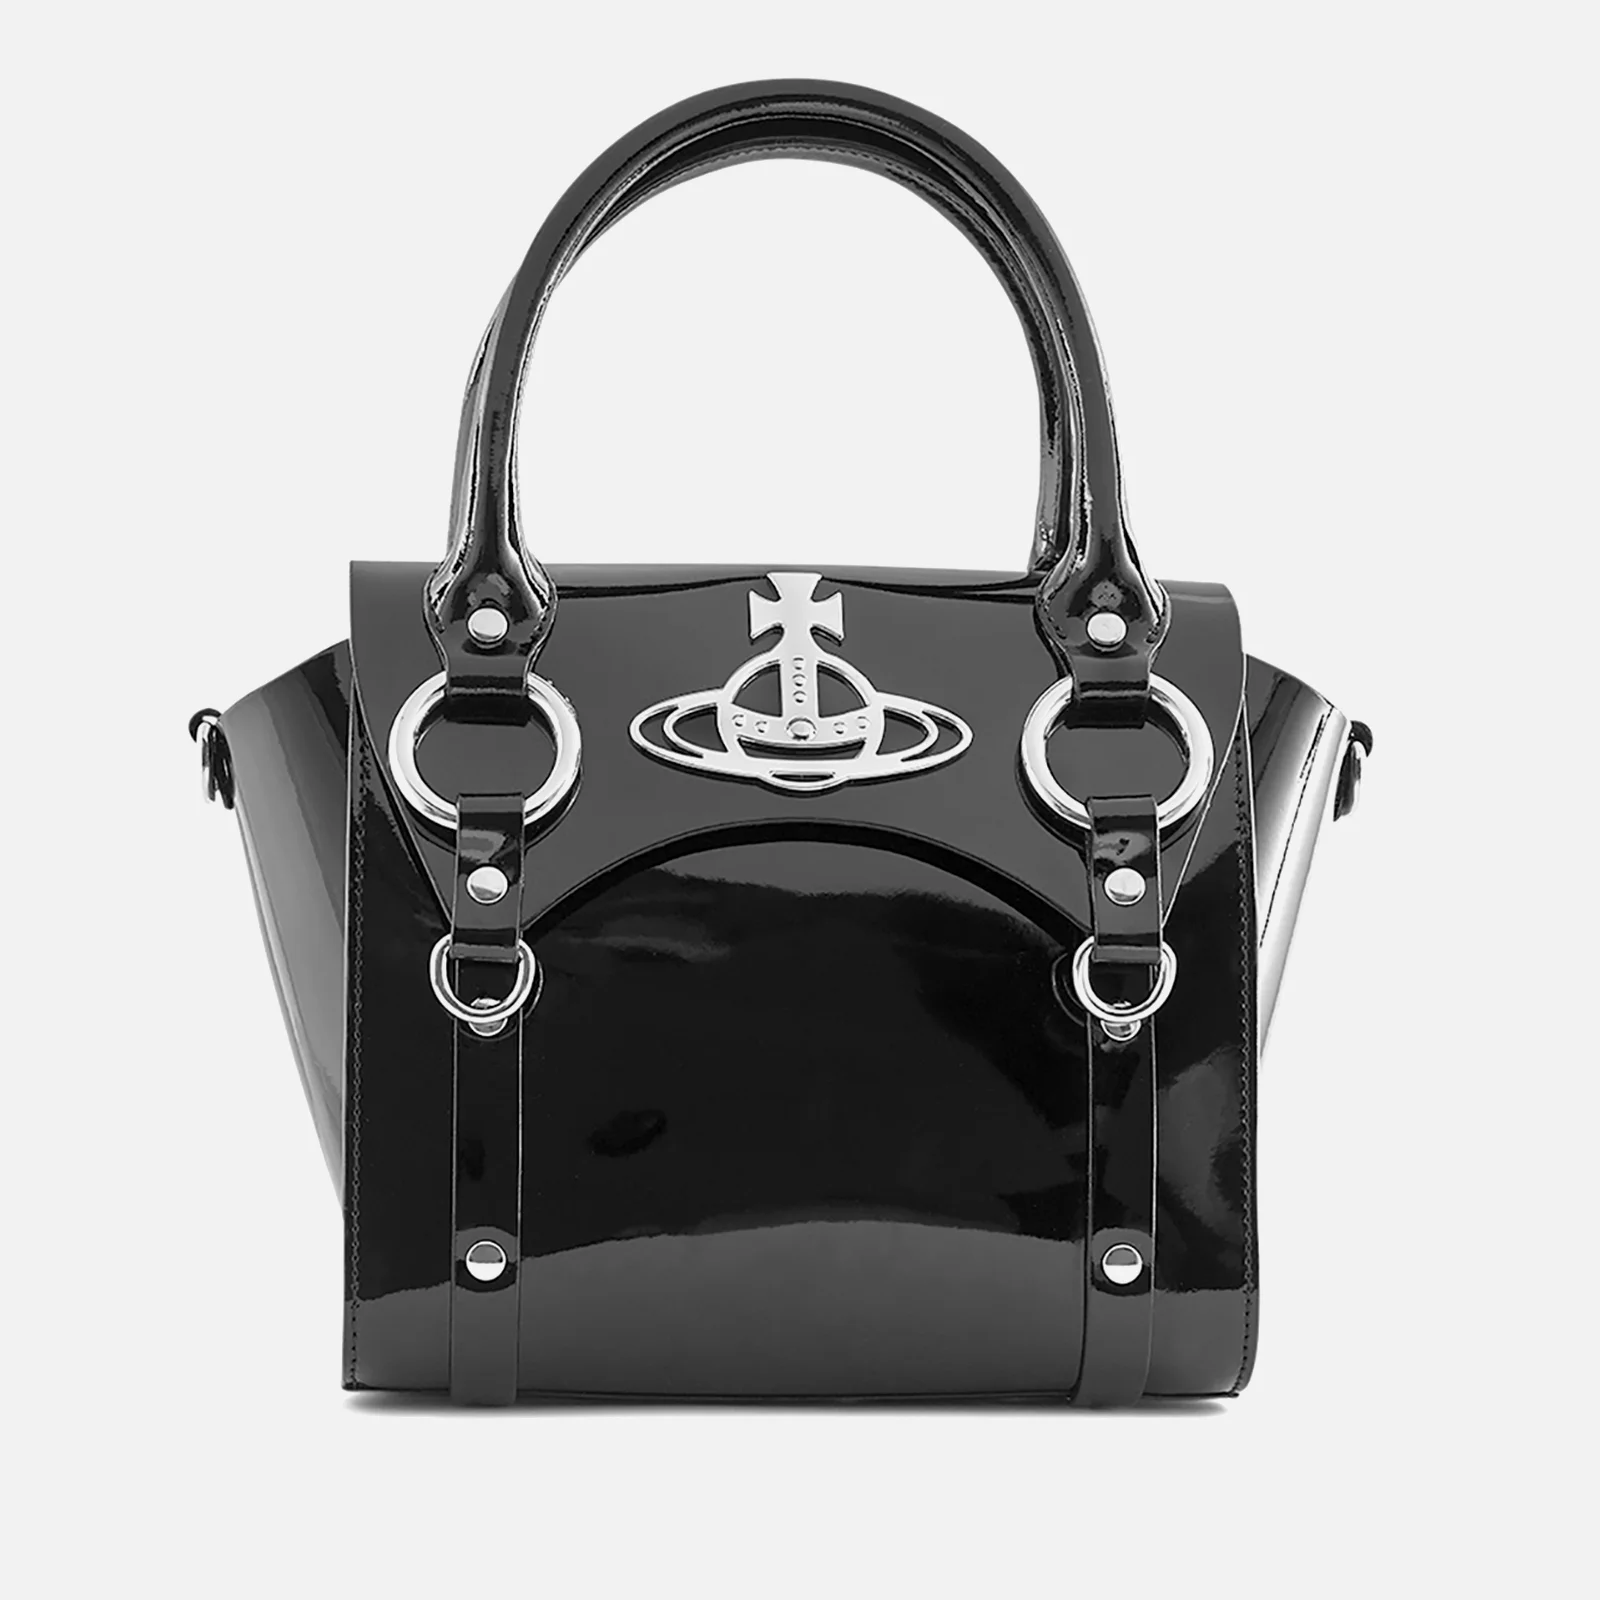 Vivienne Westwood Betty Small Patent Leather Handbag Image 1